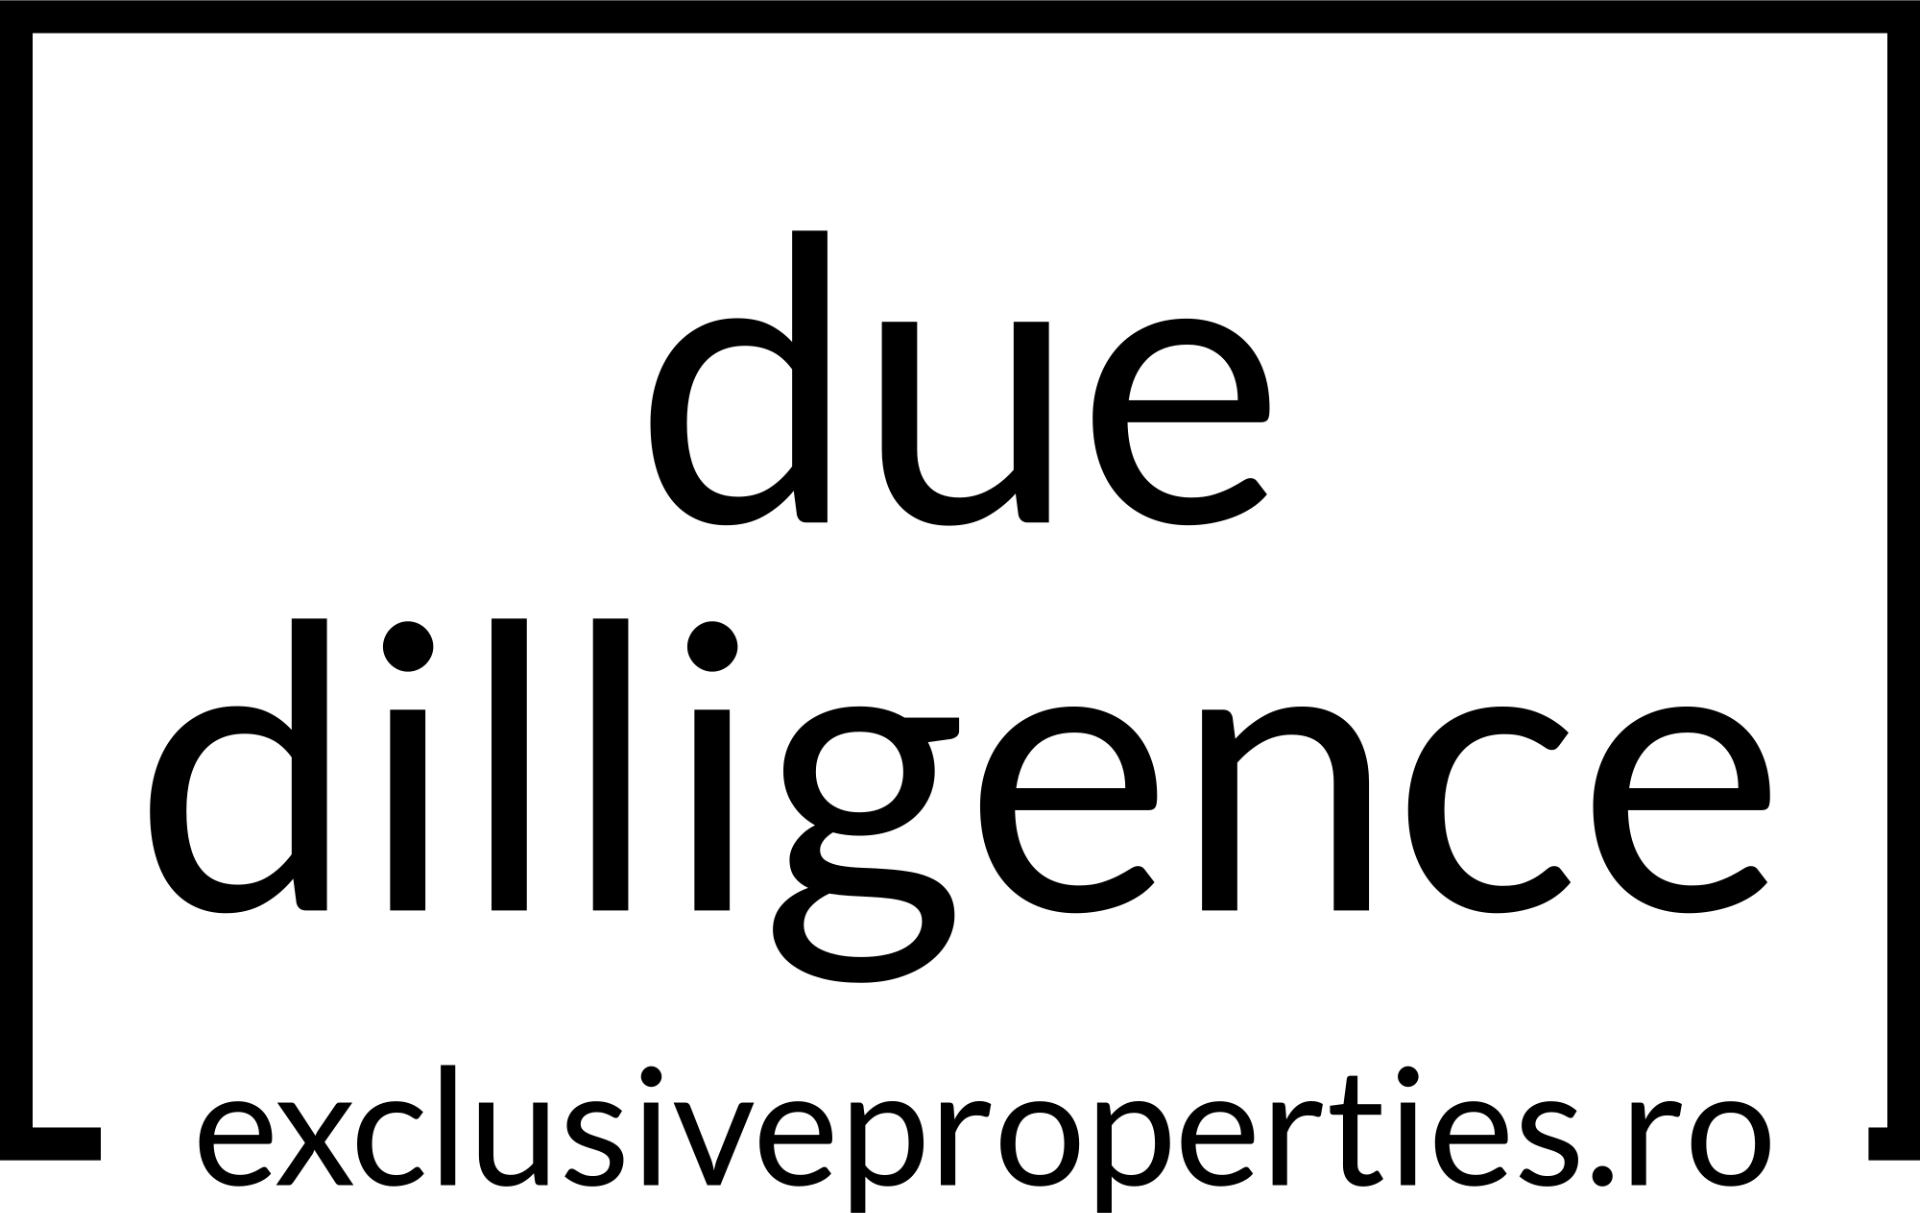 due-dilligence-high-resolution-logo-black-transparent